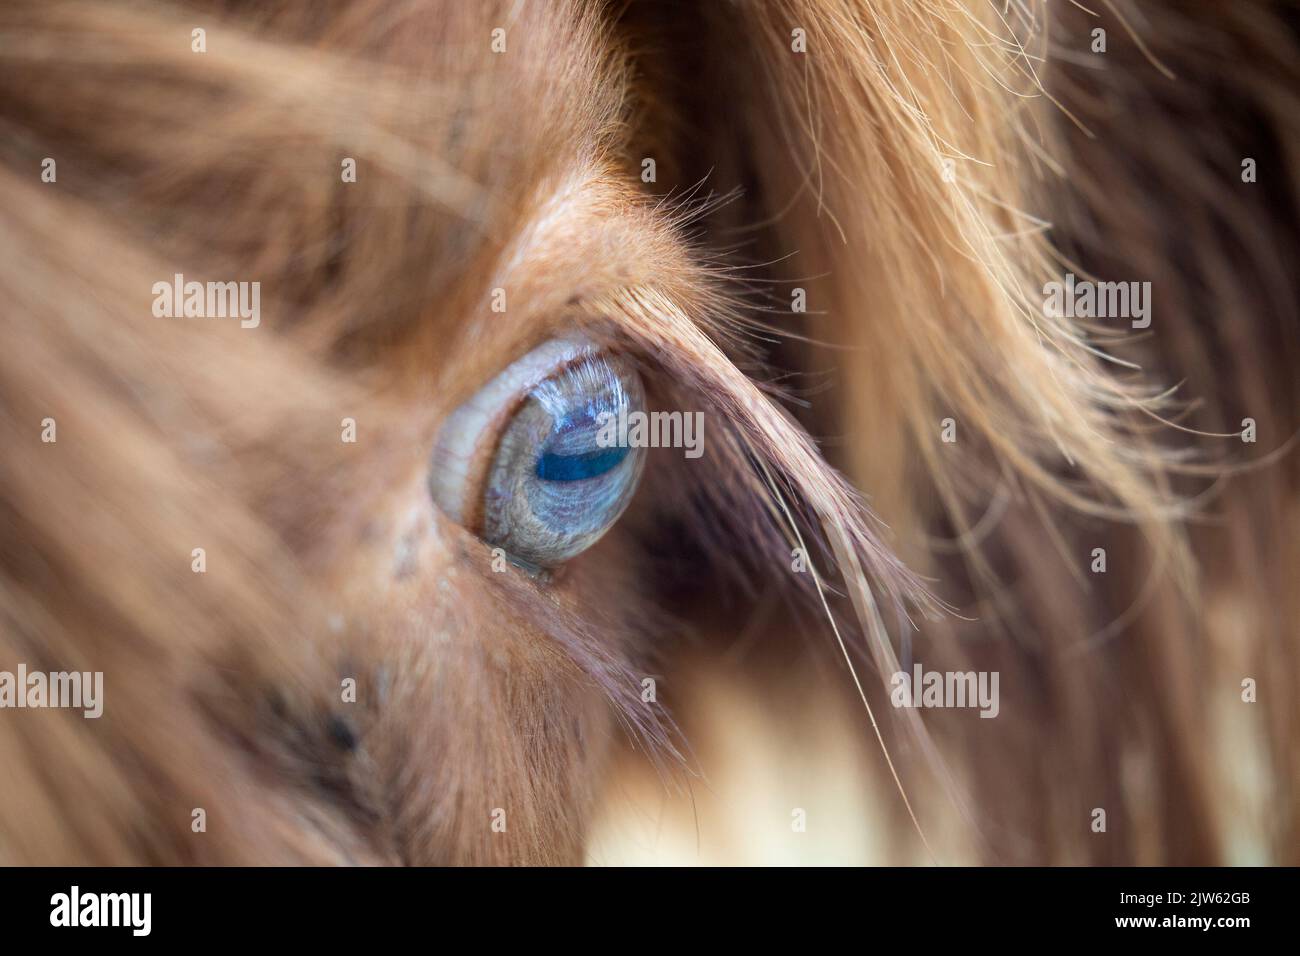 Highland cow unusual blue eye close up Stock Photo